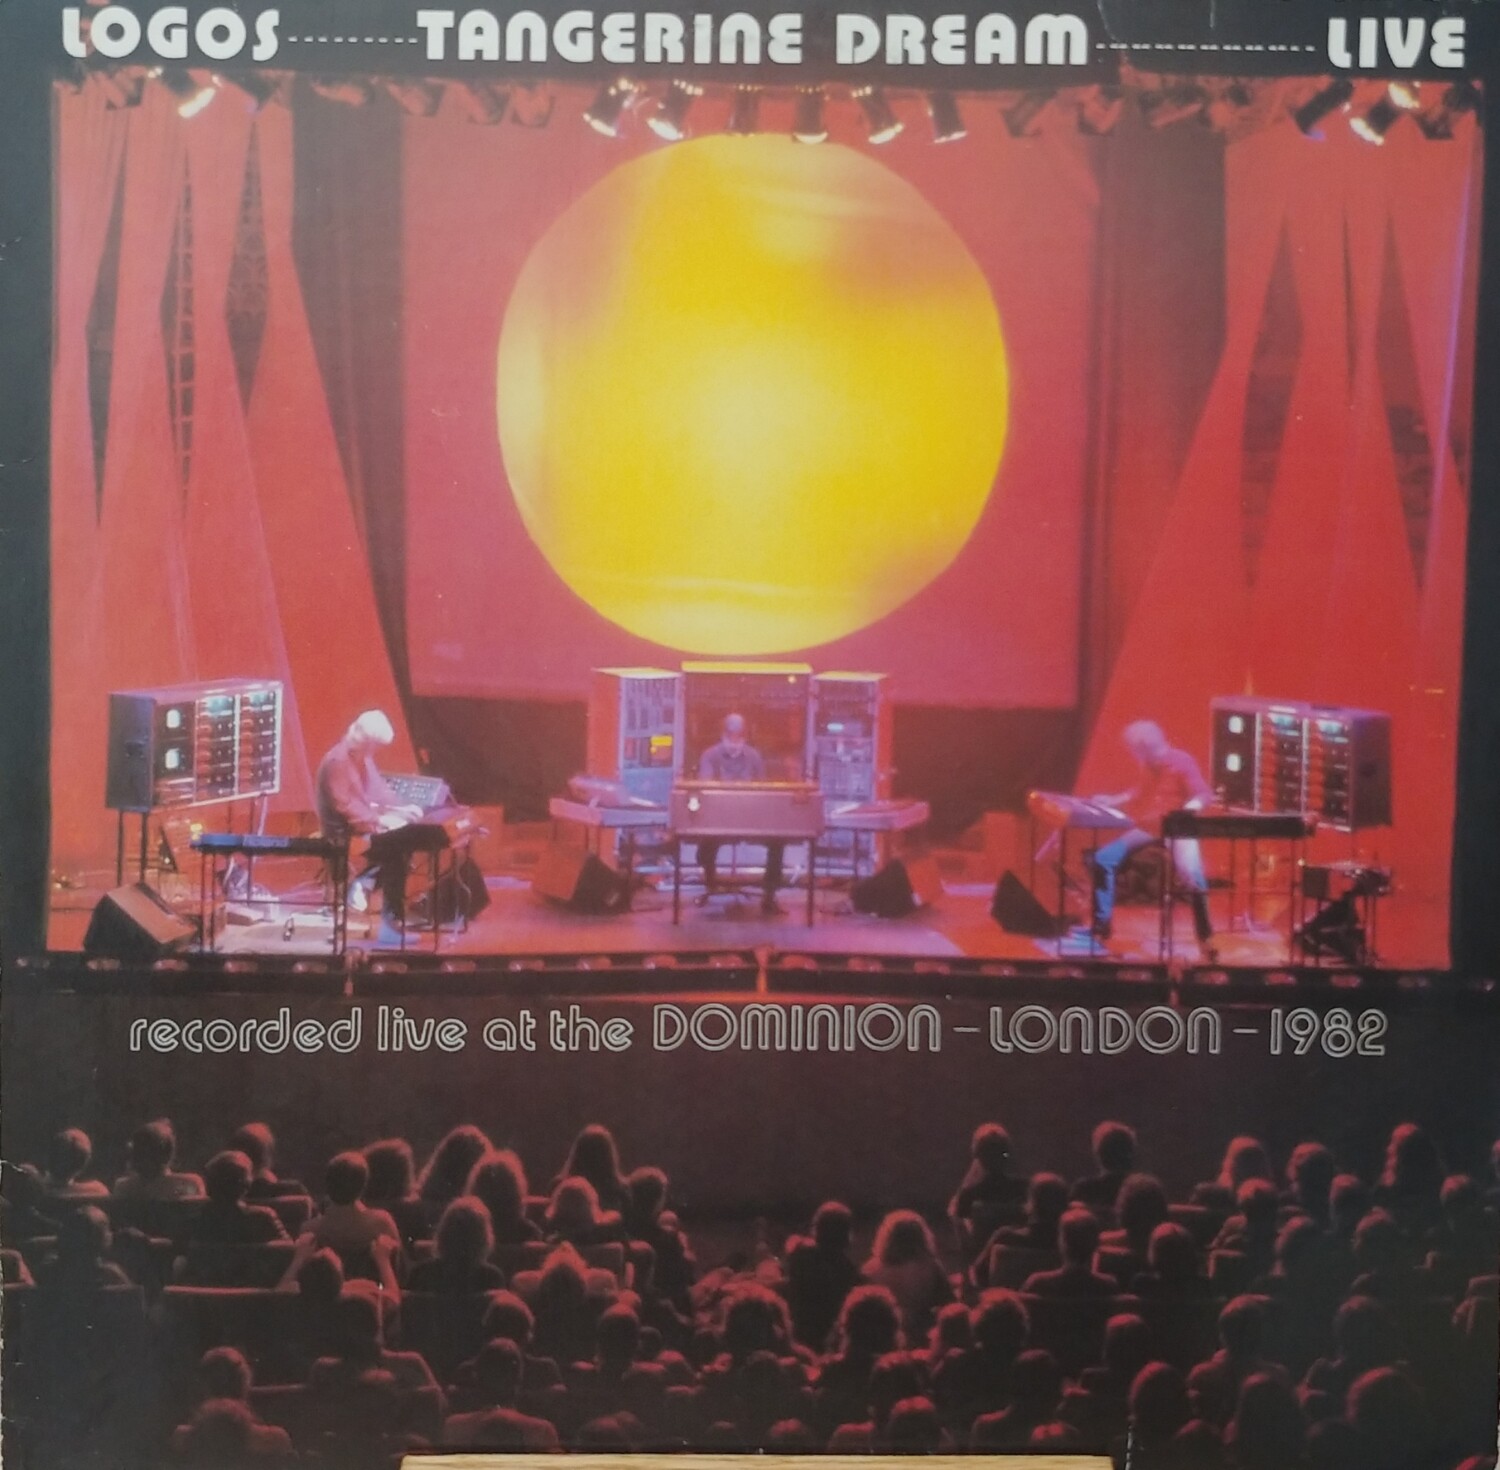 Tangerine Dream - Logos Live at Dominion London 1982